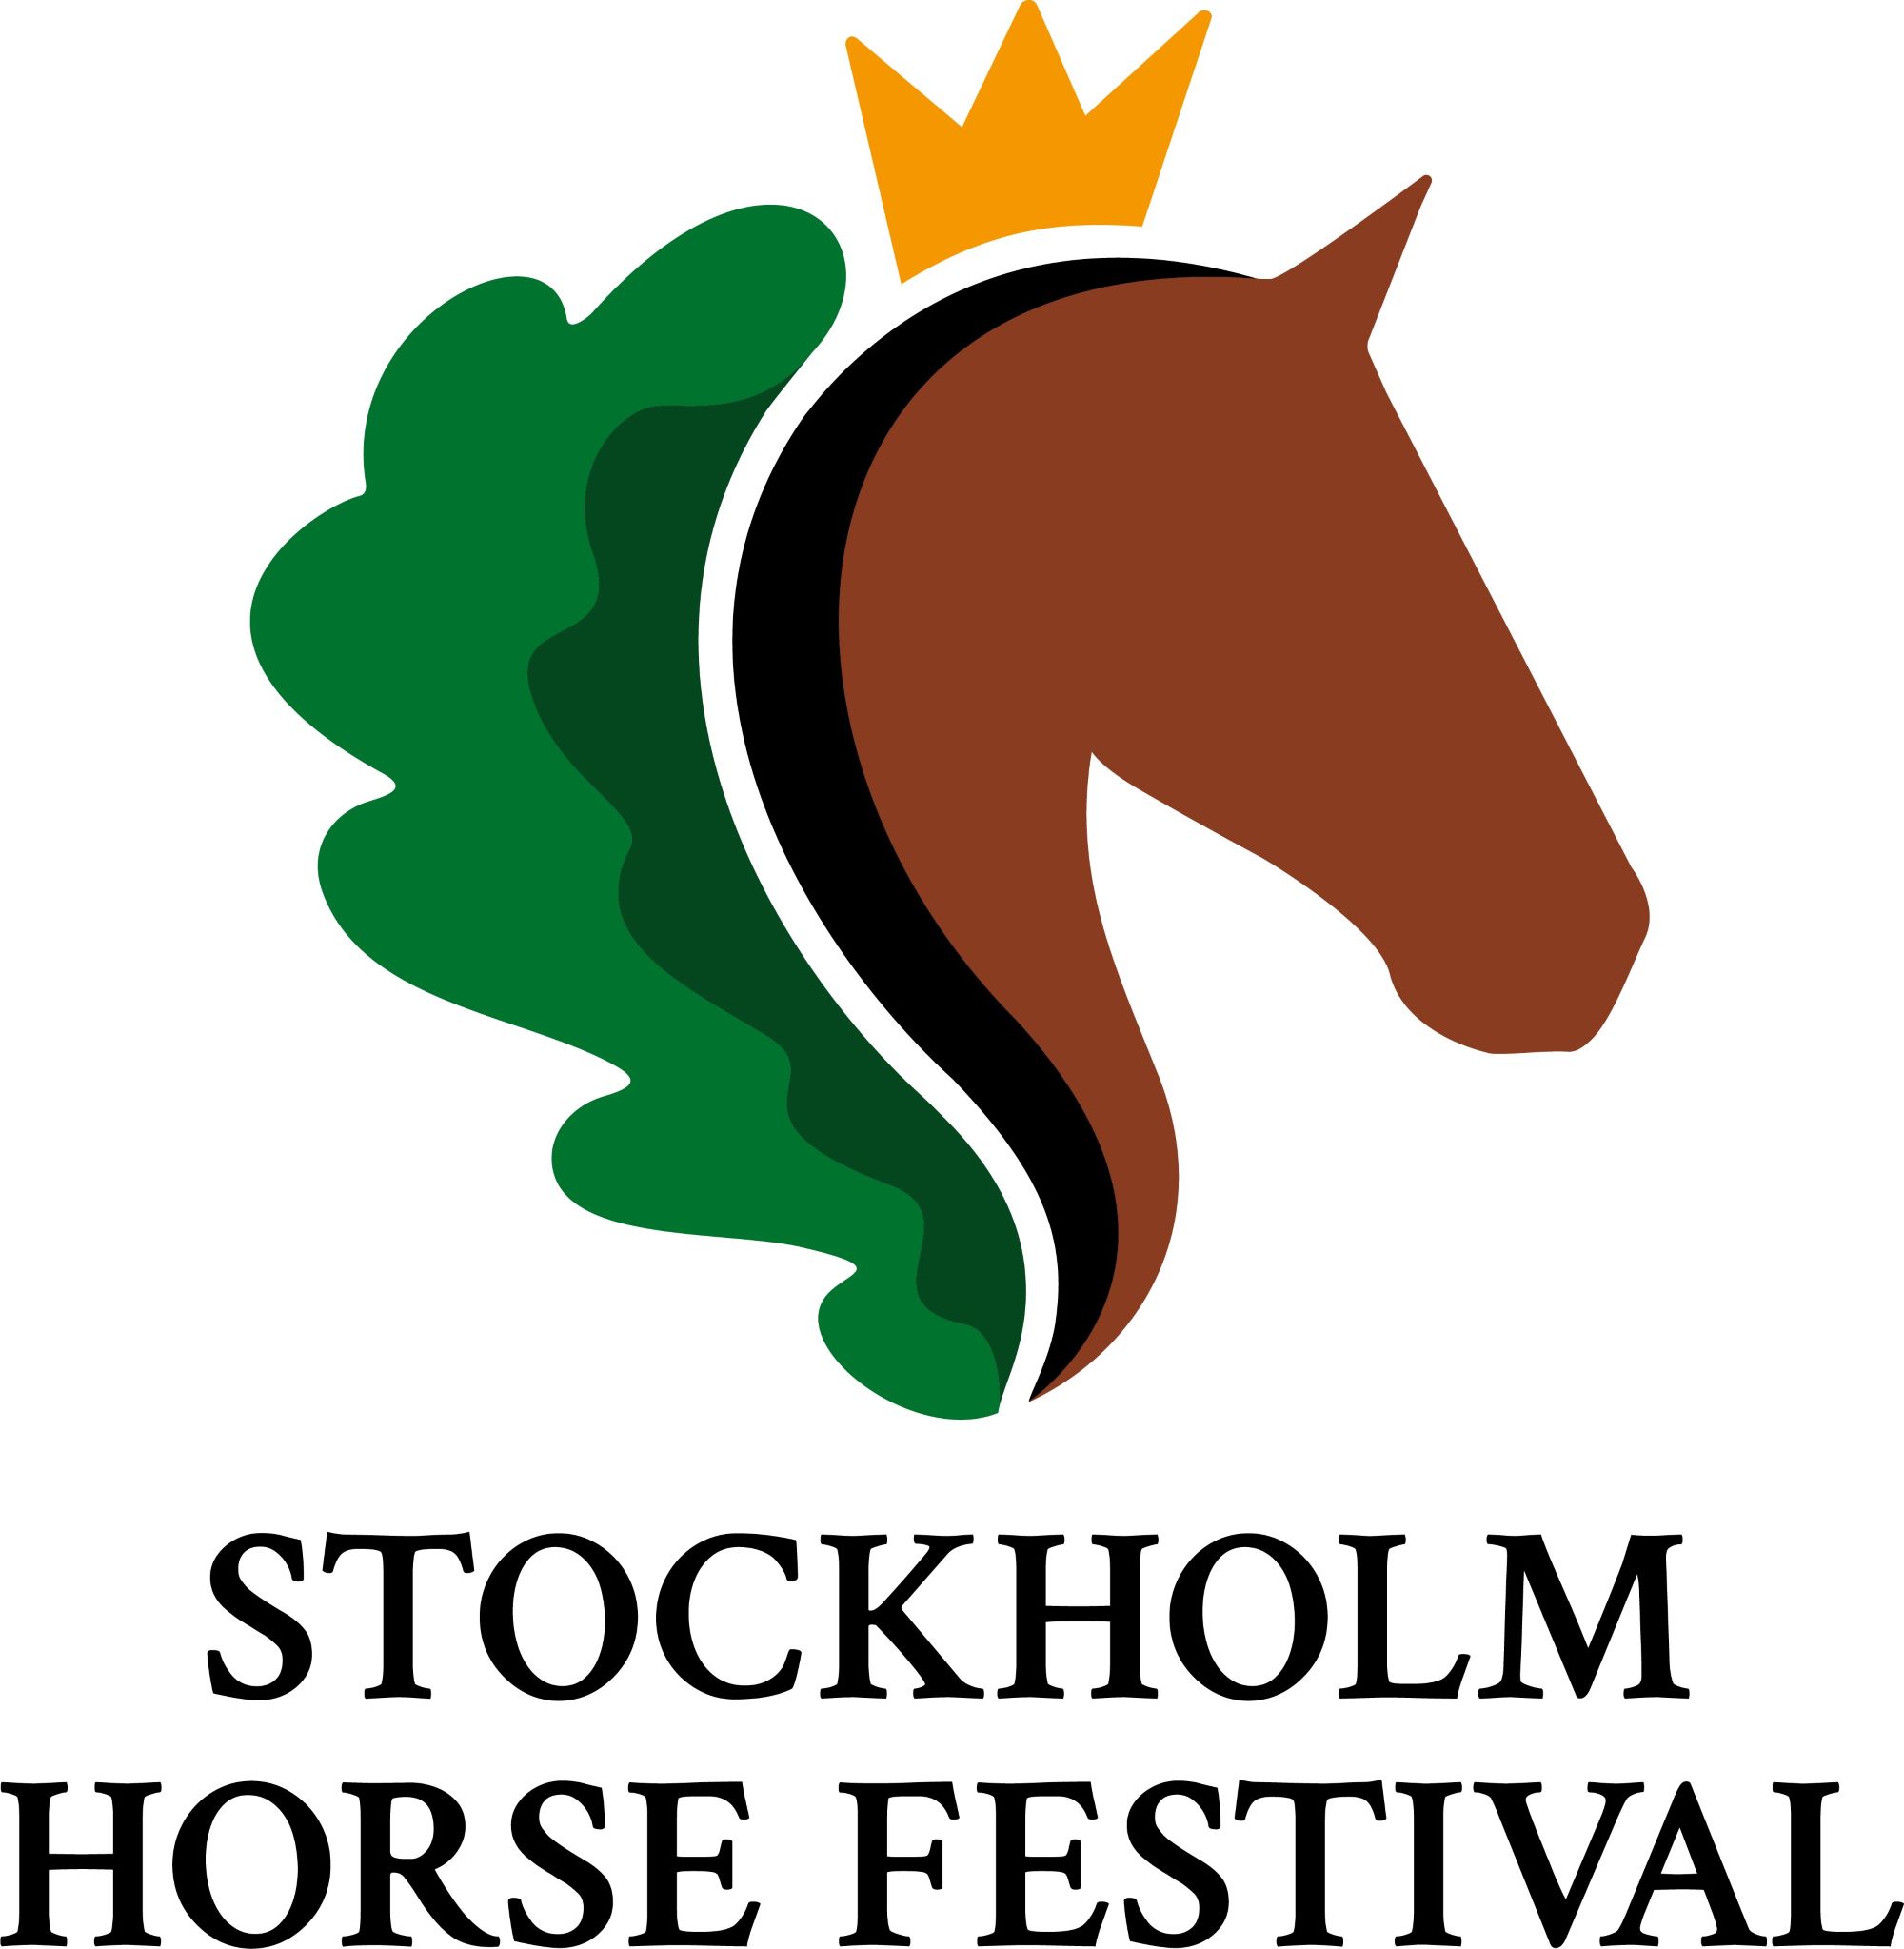 STOCKHOLM HORSE FESTIVAL